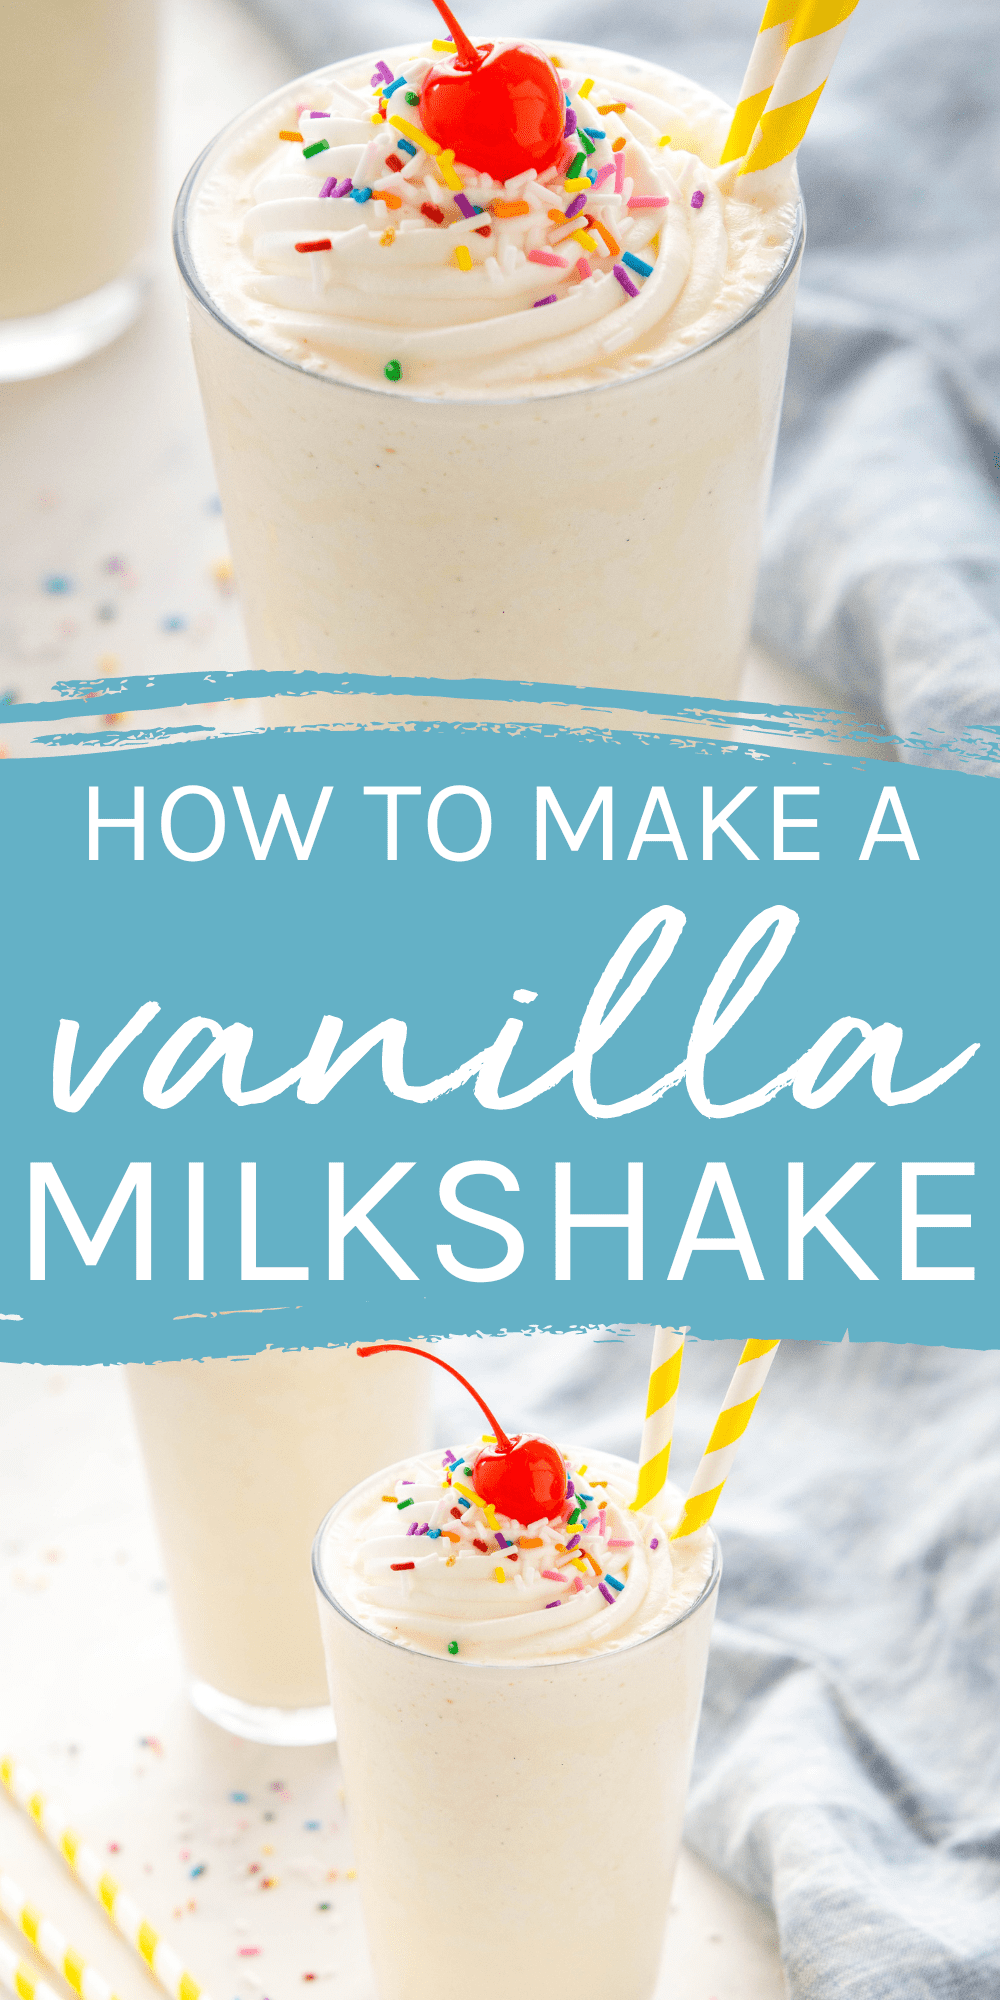 This Vanilla Milkshake recipe is the BEST homemade milkshake - a cool, creamy, smooth, and indulgent treat with an intense vanilla flavour. Recipe from thebusybaker.ca! #vanillamilkshake #howtomakeamilkshake #homemademilkshake #milkshakerecipe #bestmilkshake #easymilkshake #homemademilkshaketutorial via @busybakerblog